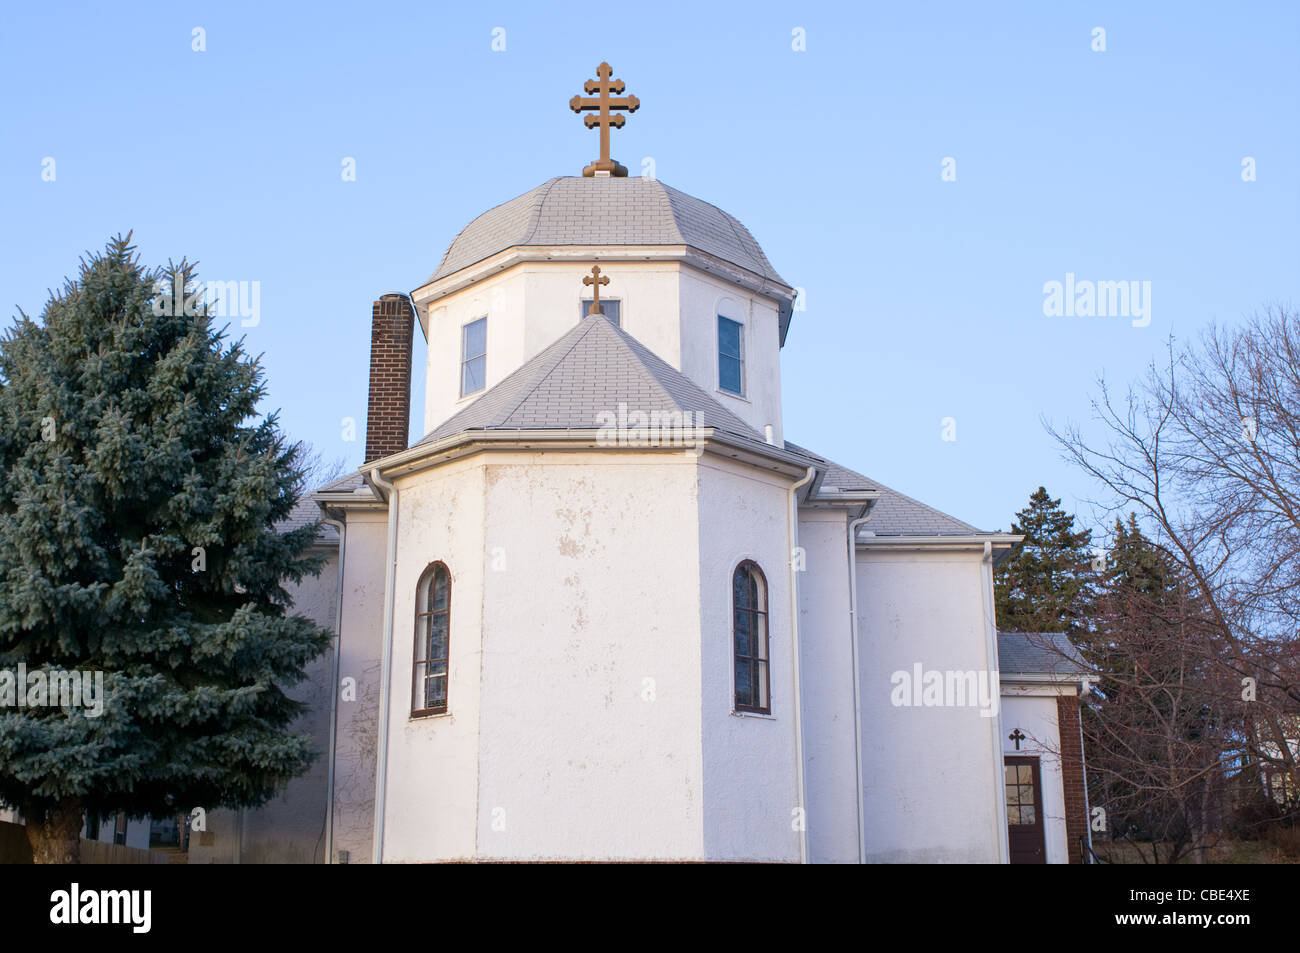 Romanian Orthodox Church dome and cross in South Saint Paul Minnesota Stock Photo